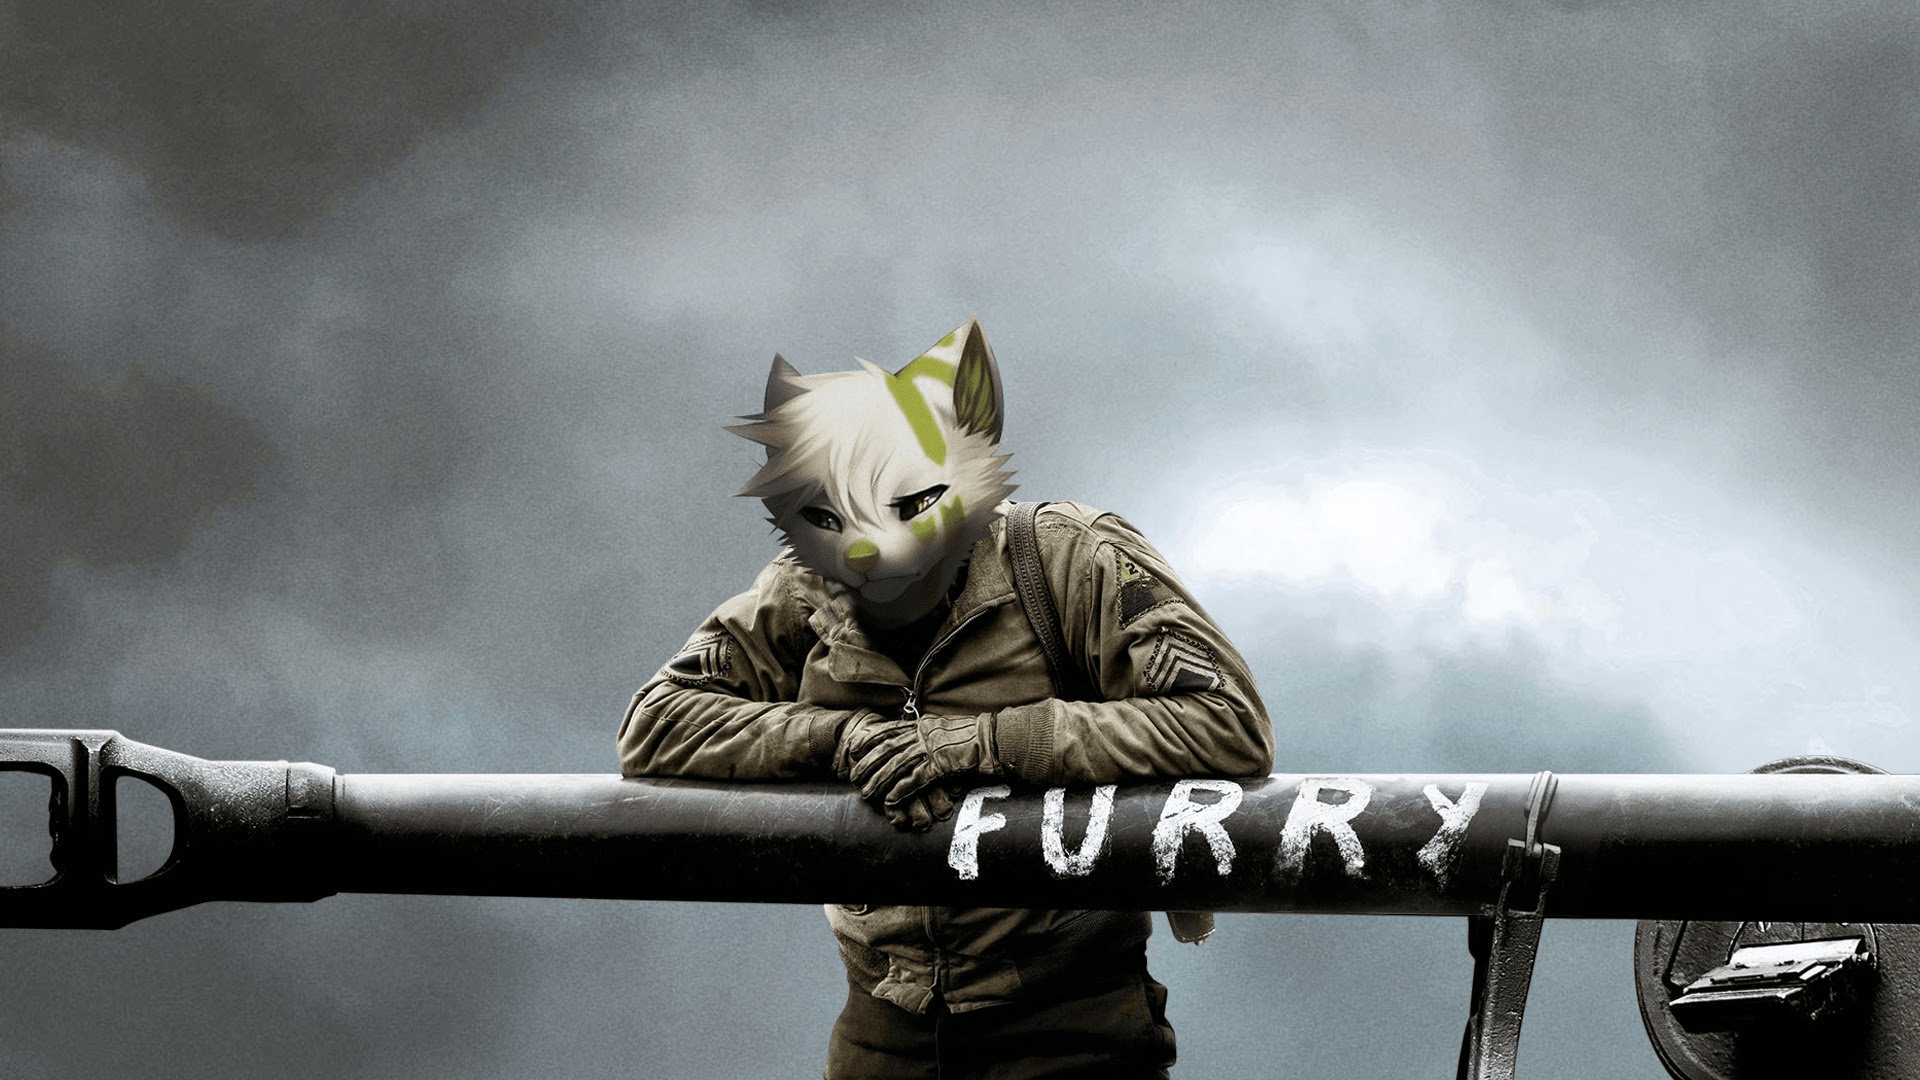 Download the Fury Furry Wallpaper, Fury Furry iPhone Wallpaper, Fury